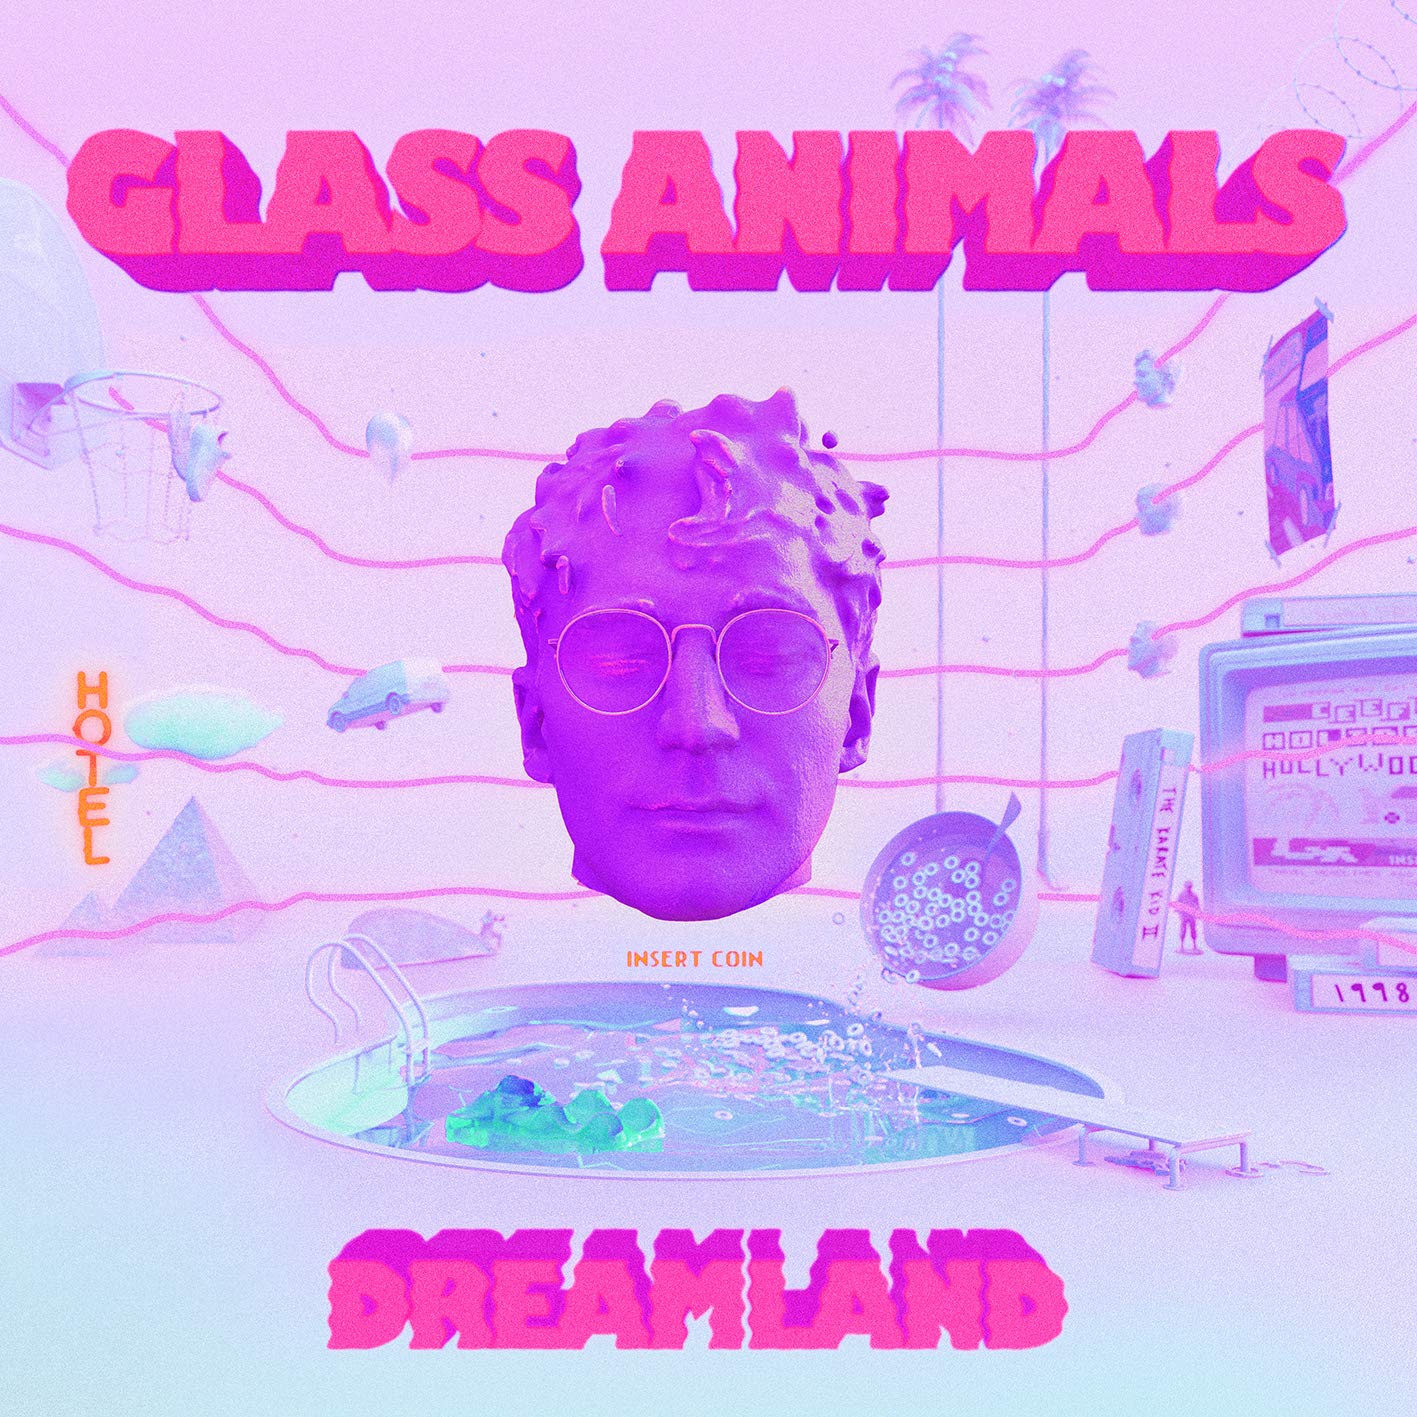 CD Shop - GLASS ANIMALS DREAMLAND: REAL LIFE EDITION